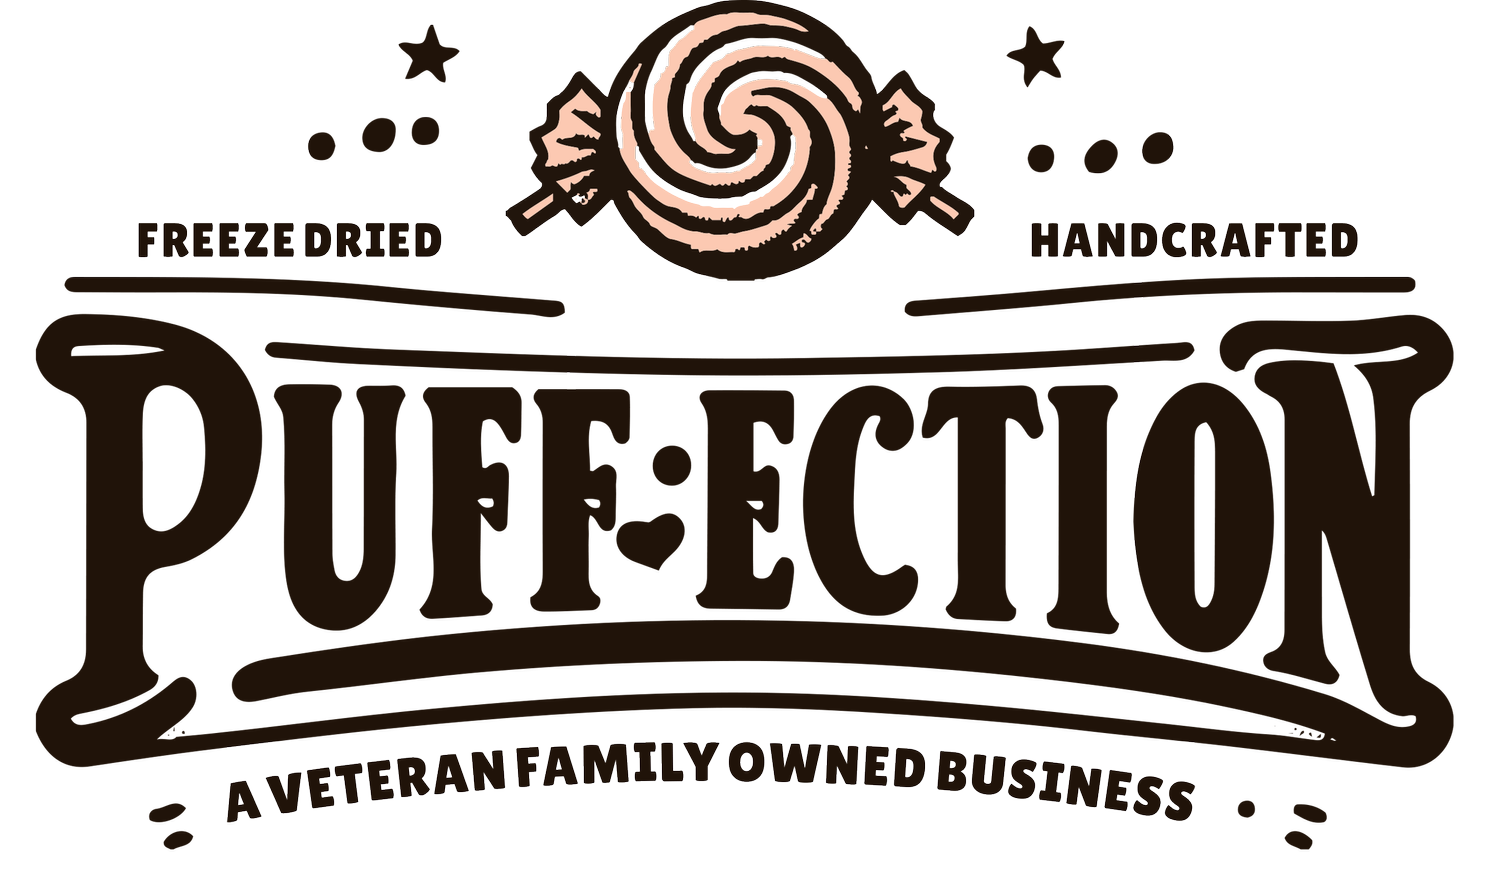 Puffection